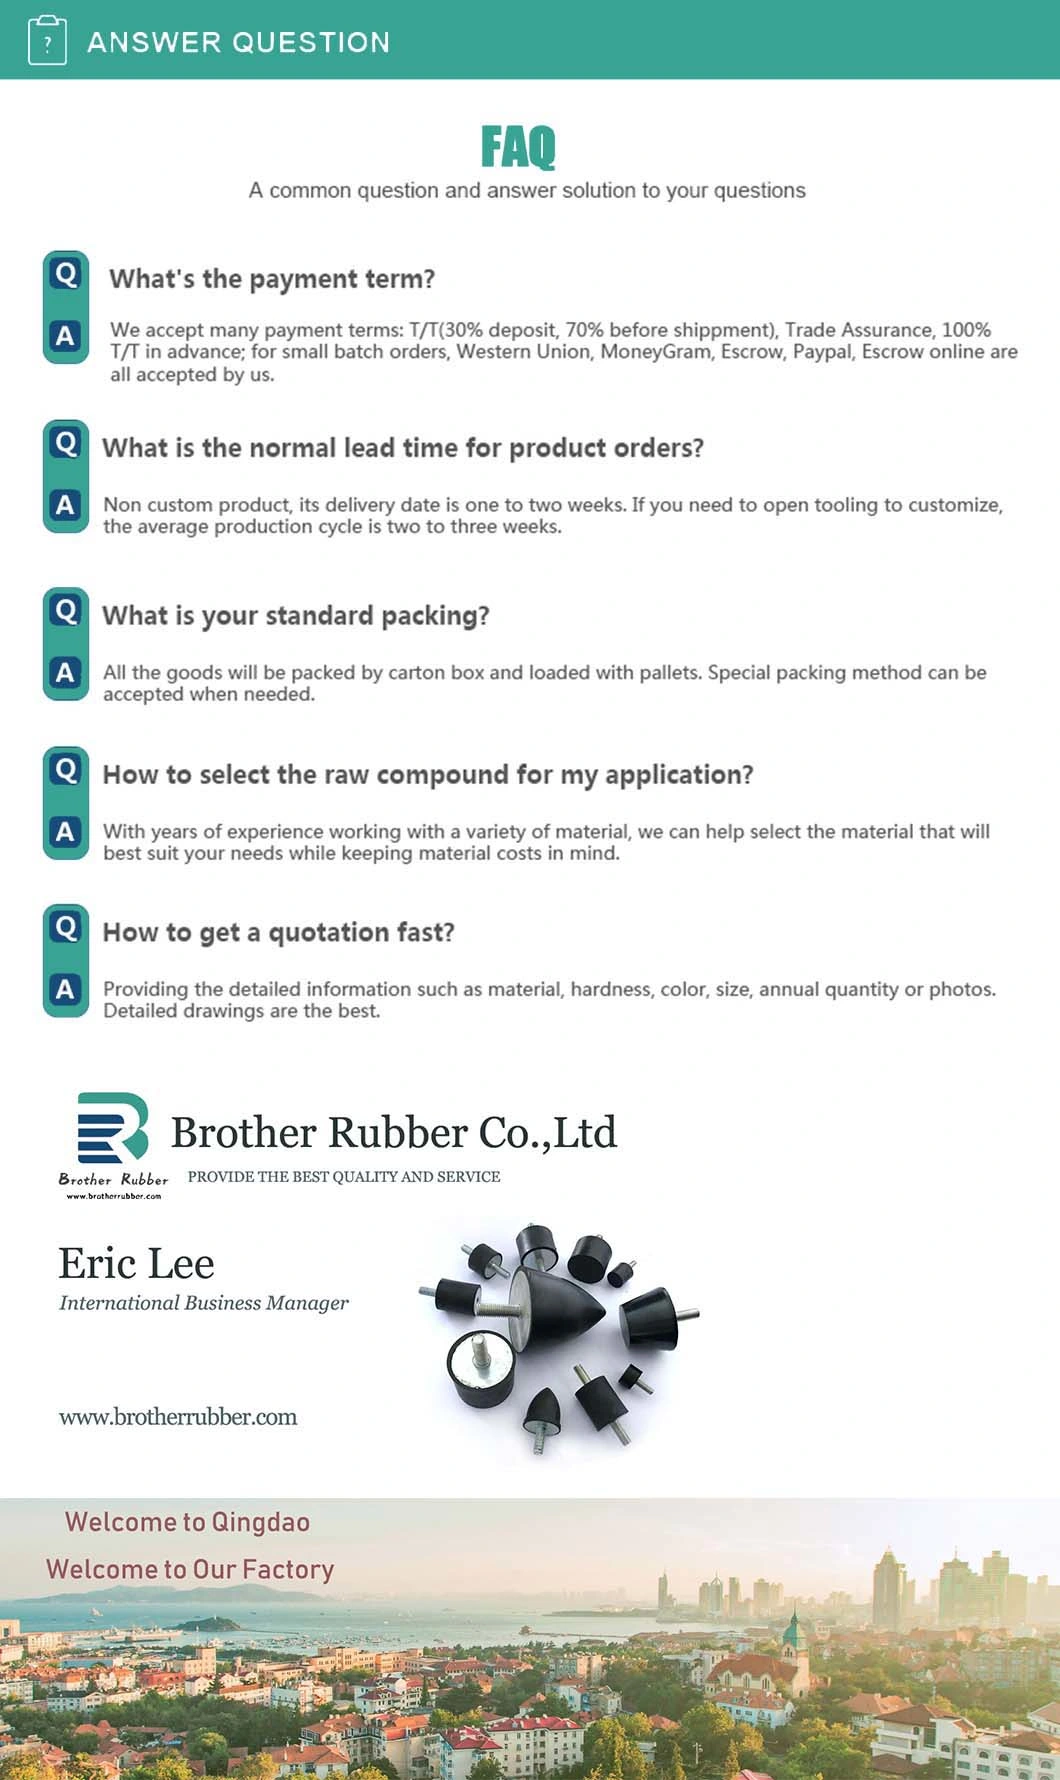 Polyurethane Bushing Kit/Rubber Grommet Suppliers/Car Wheel Bushing